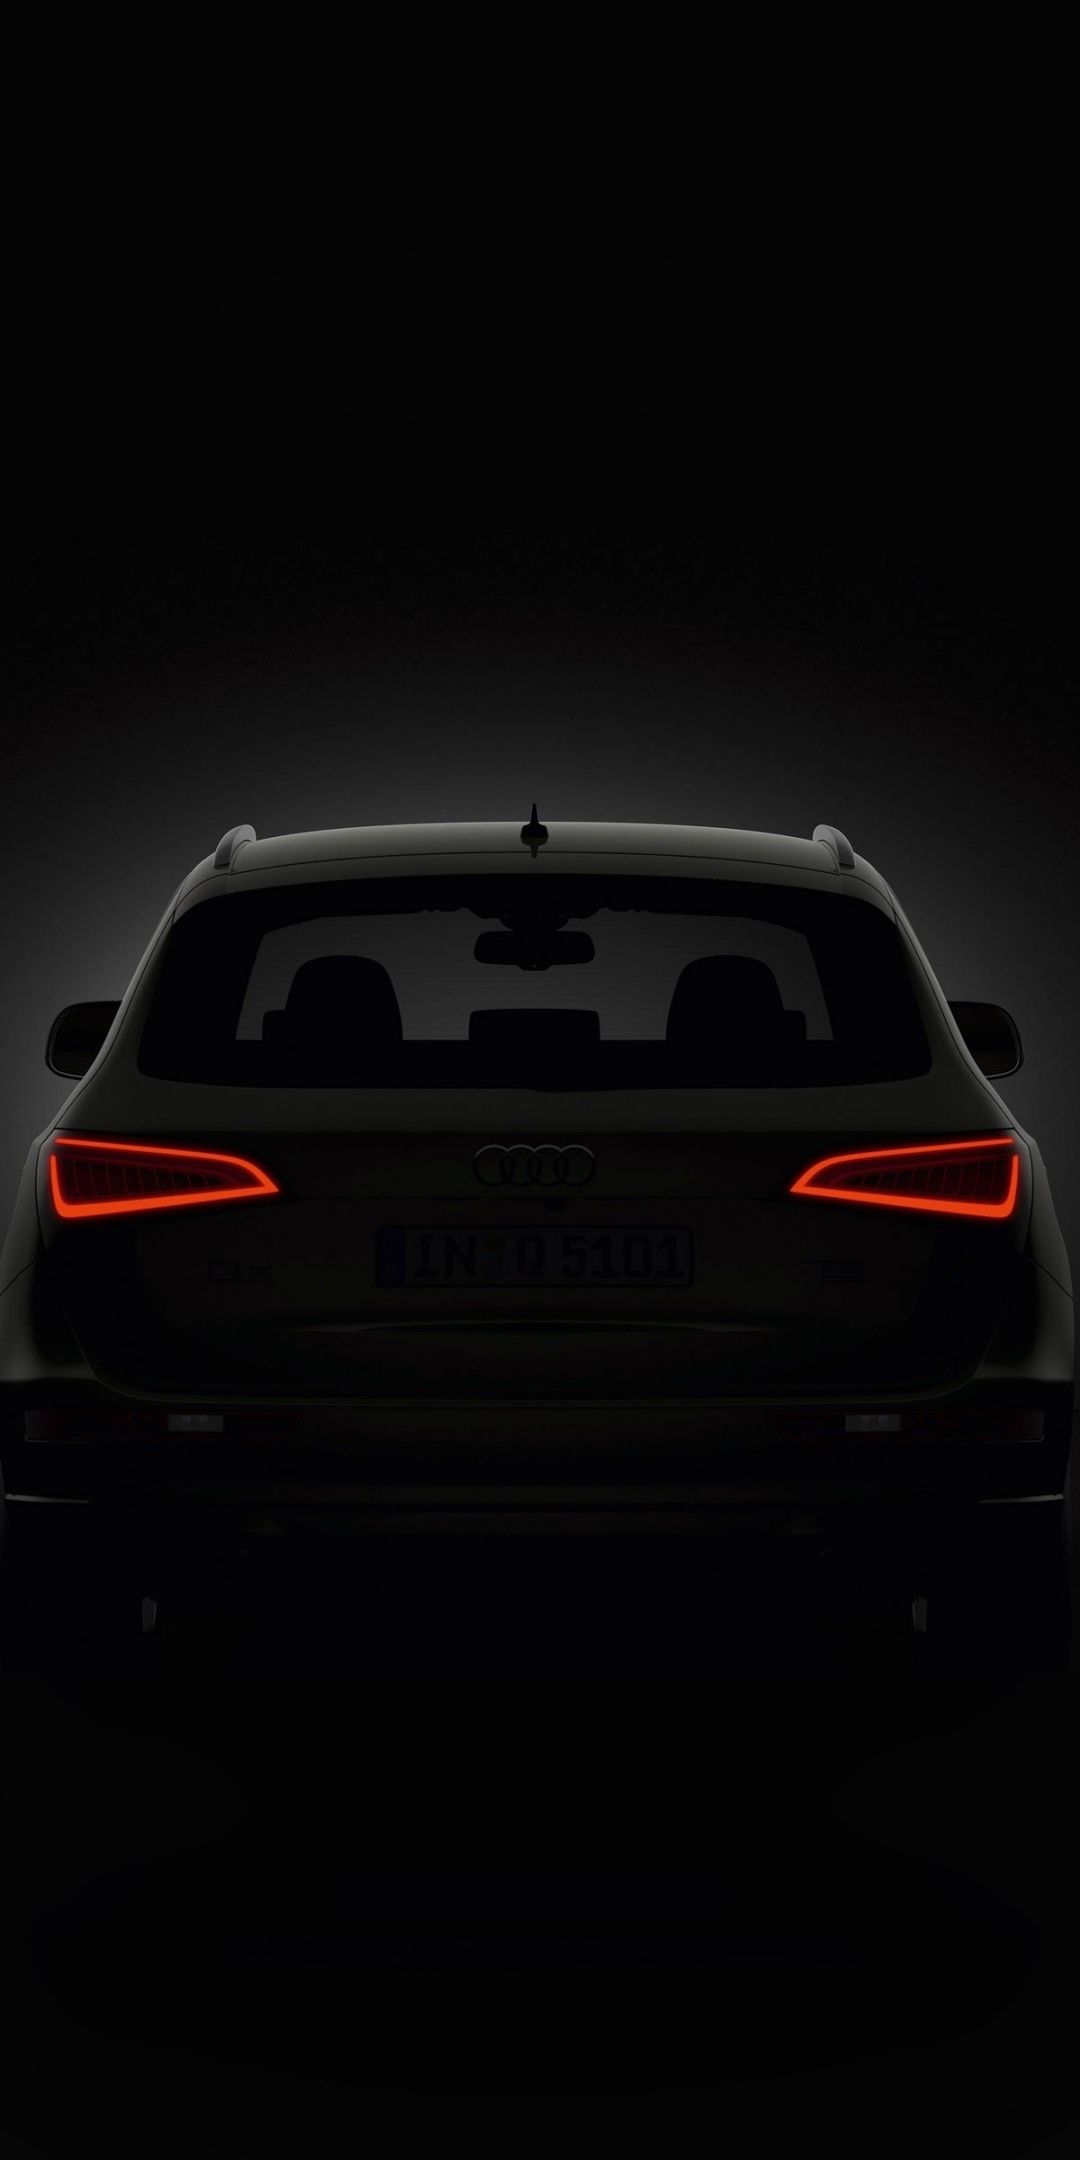 Audi Q5 Rear Portrait Wallpaper Cars